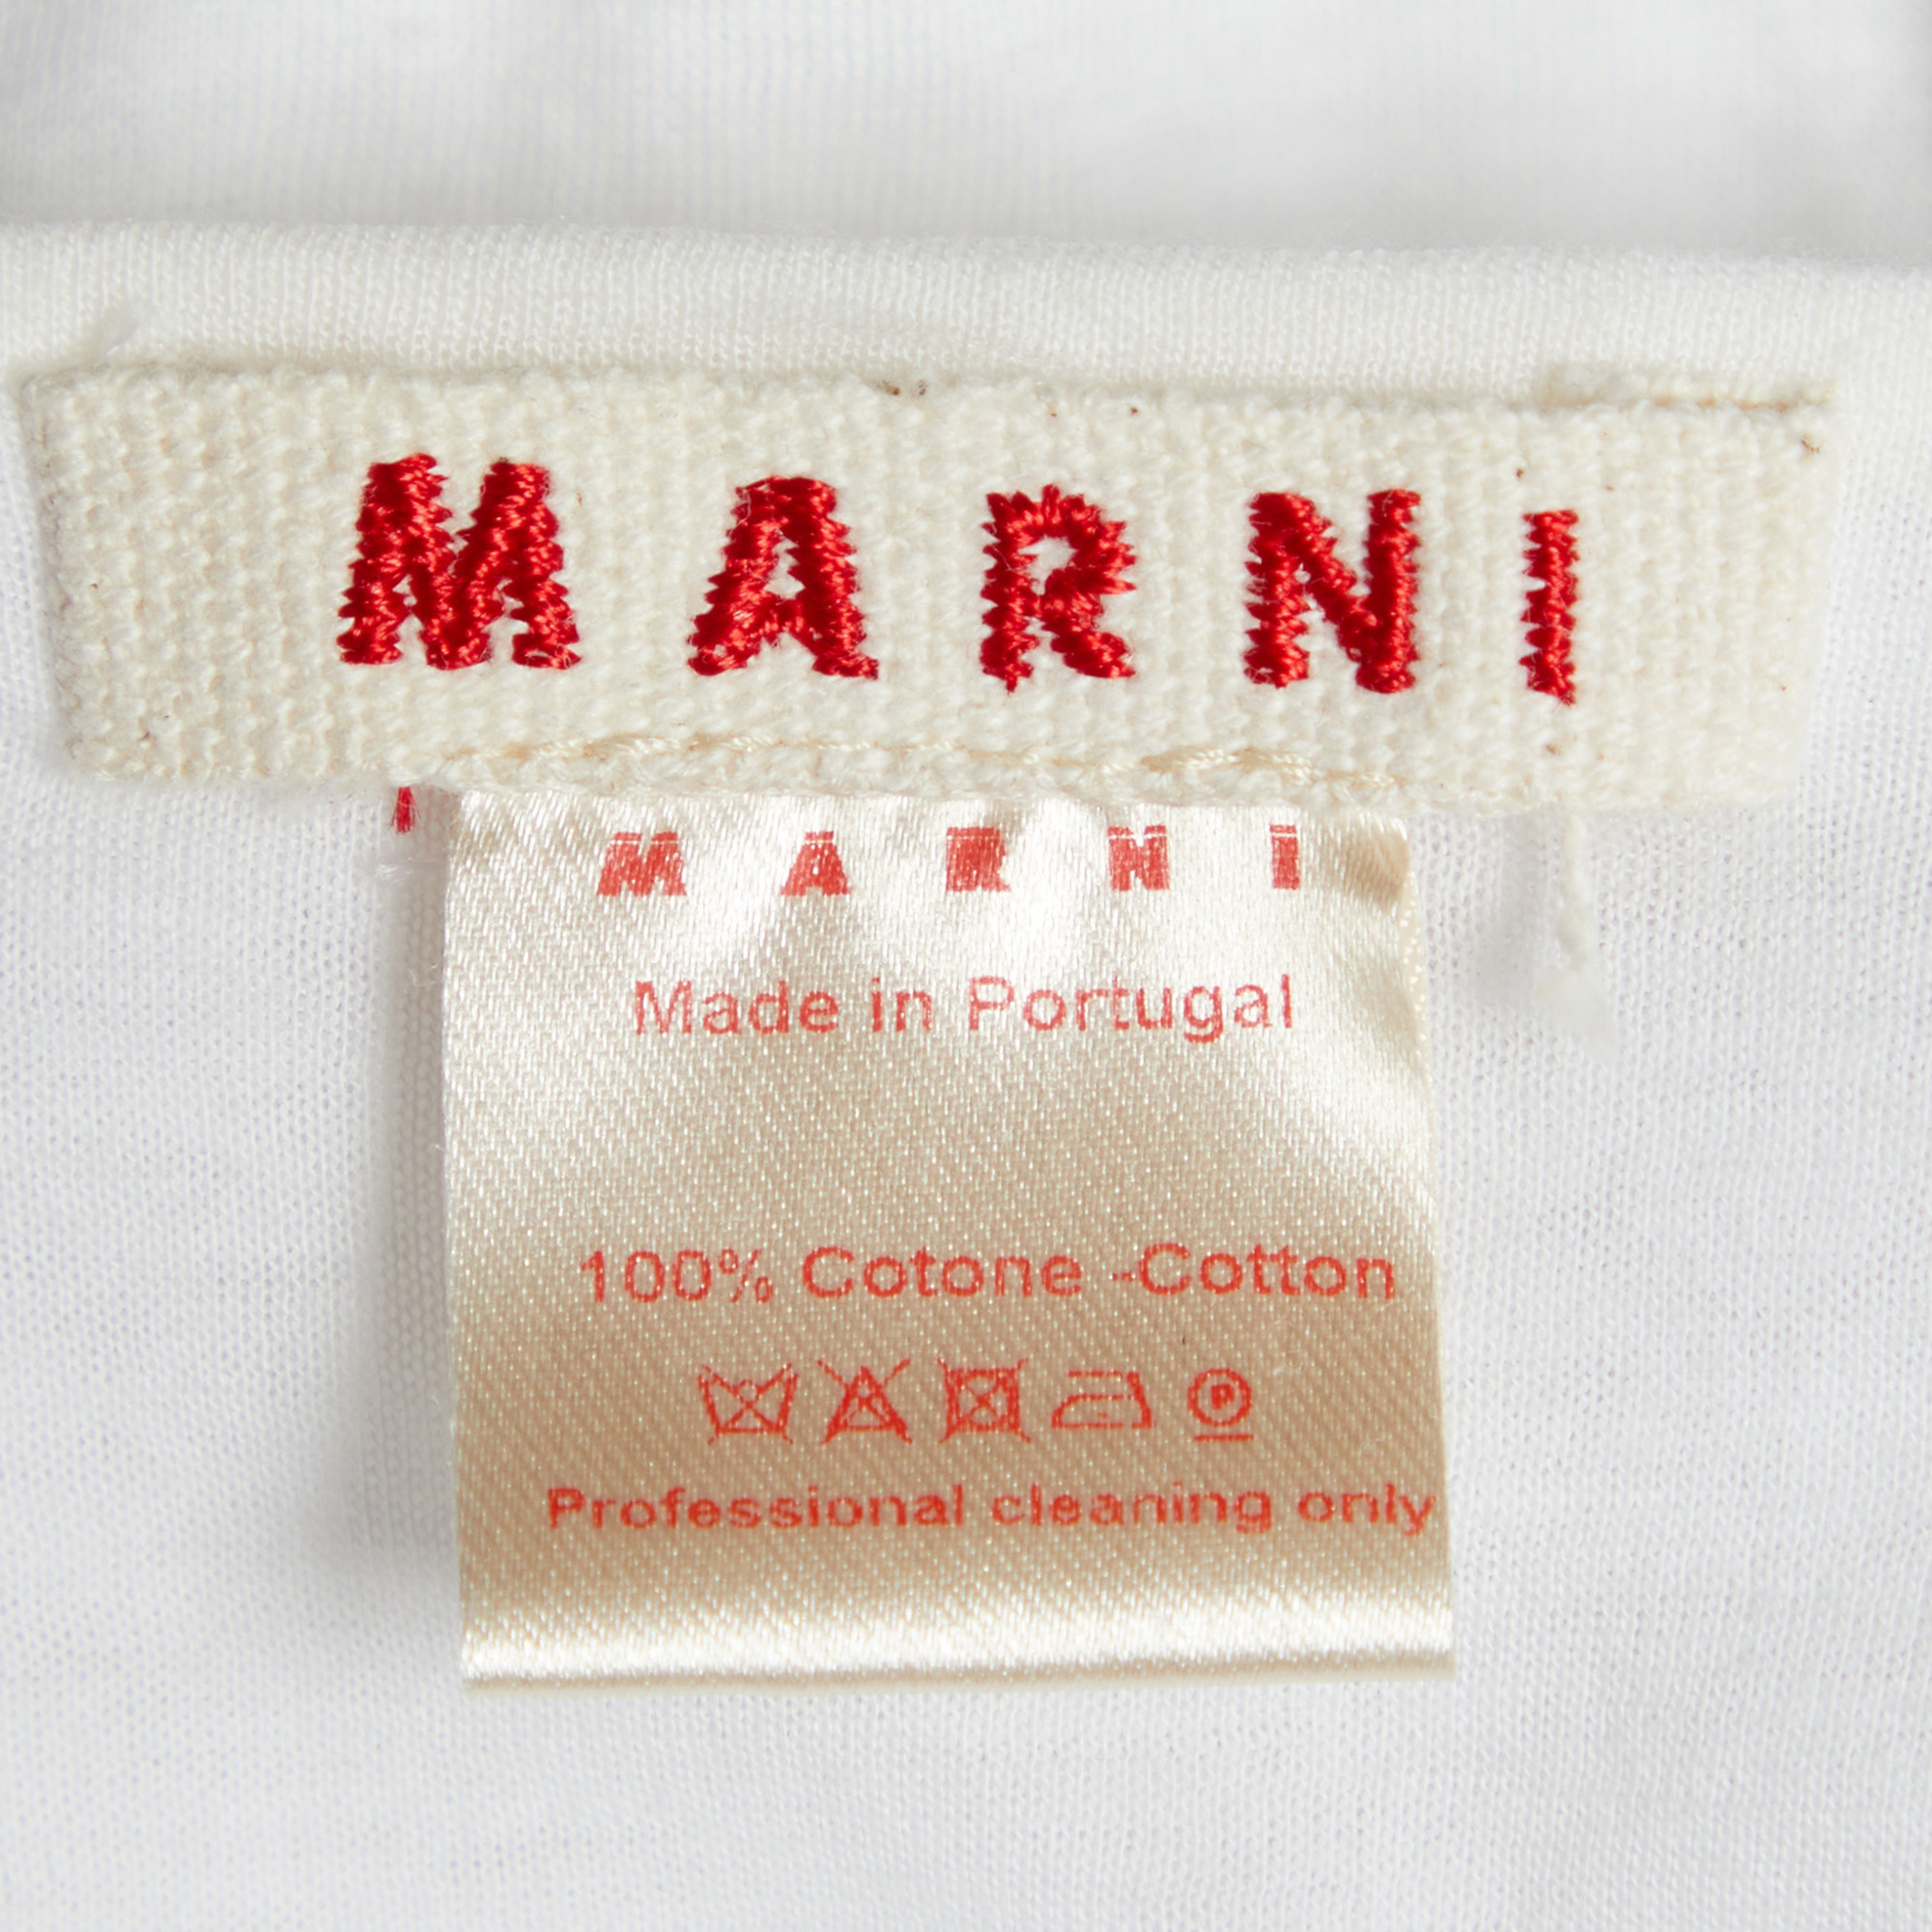 Marni White Cotton Pleated Detail Sleeveless Top S